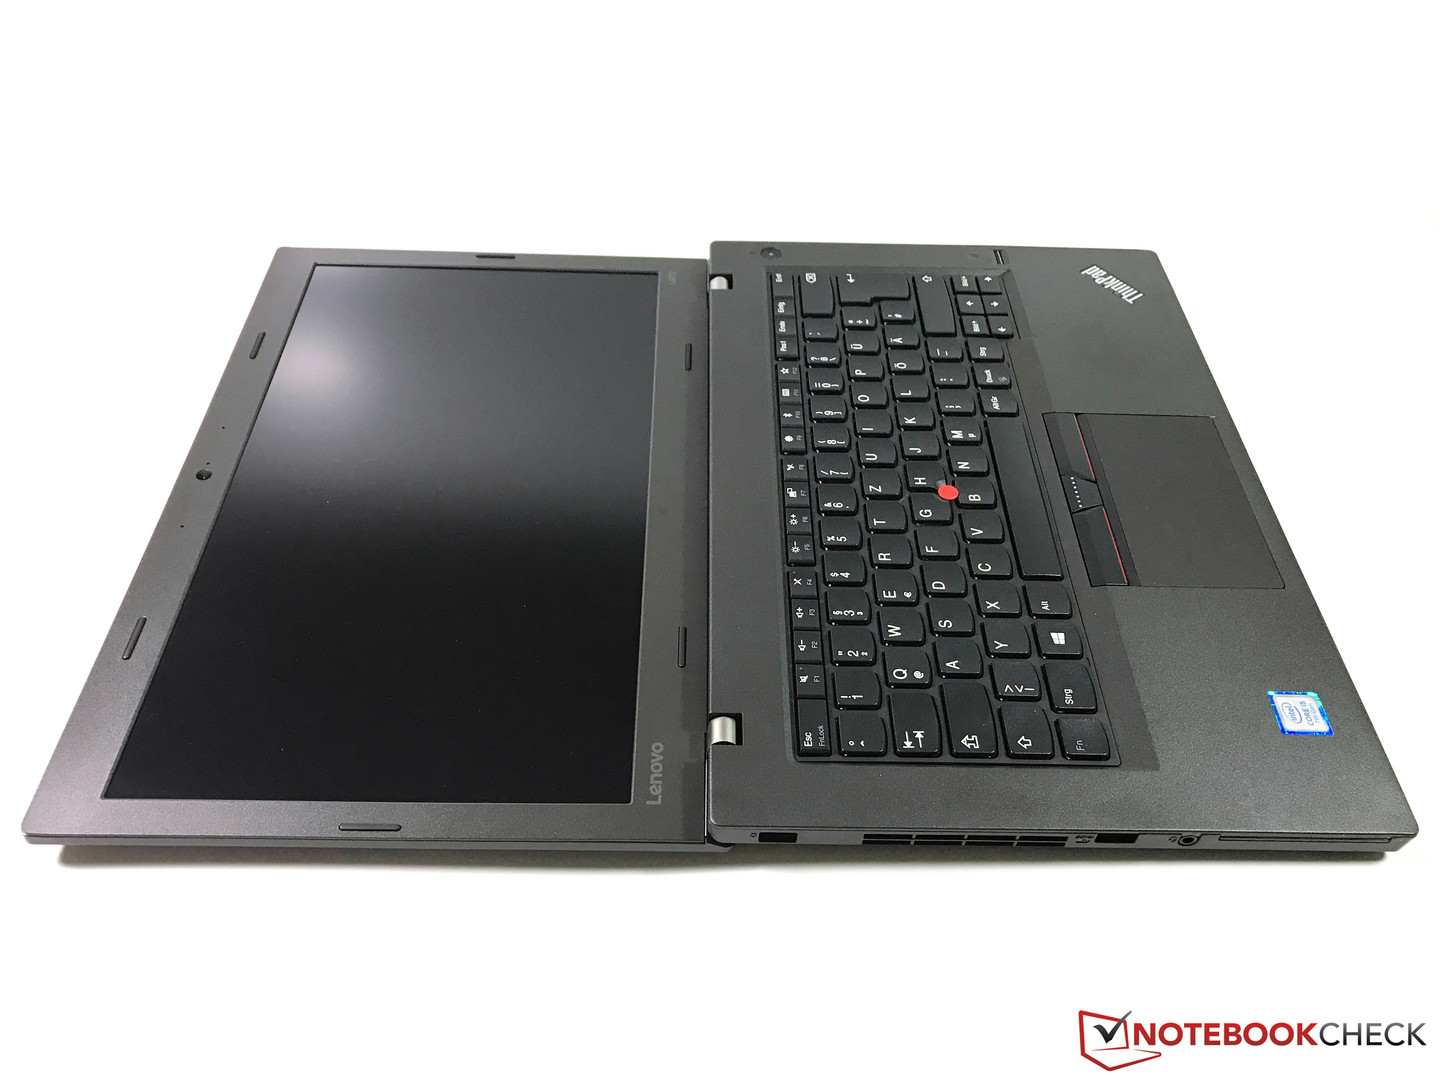 Lenovo ThinkPad L470 (i5-7200U, FHD-IPS) Laptop Review - NotebookCheck